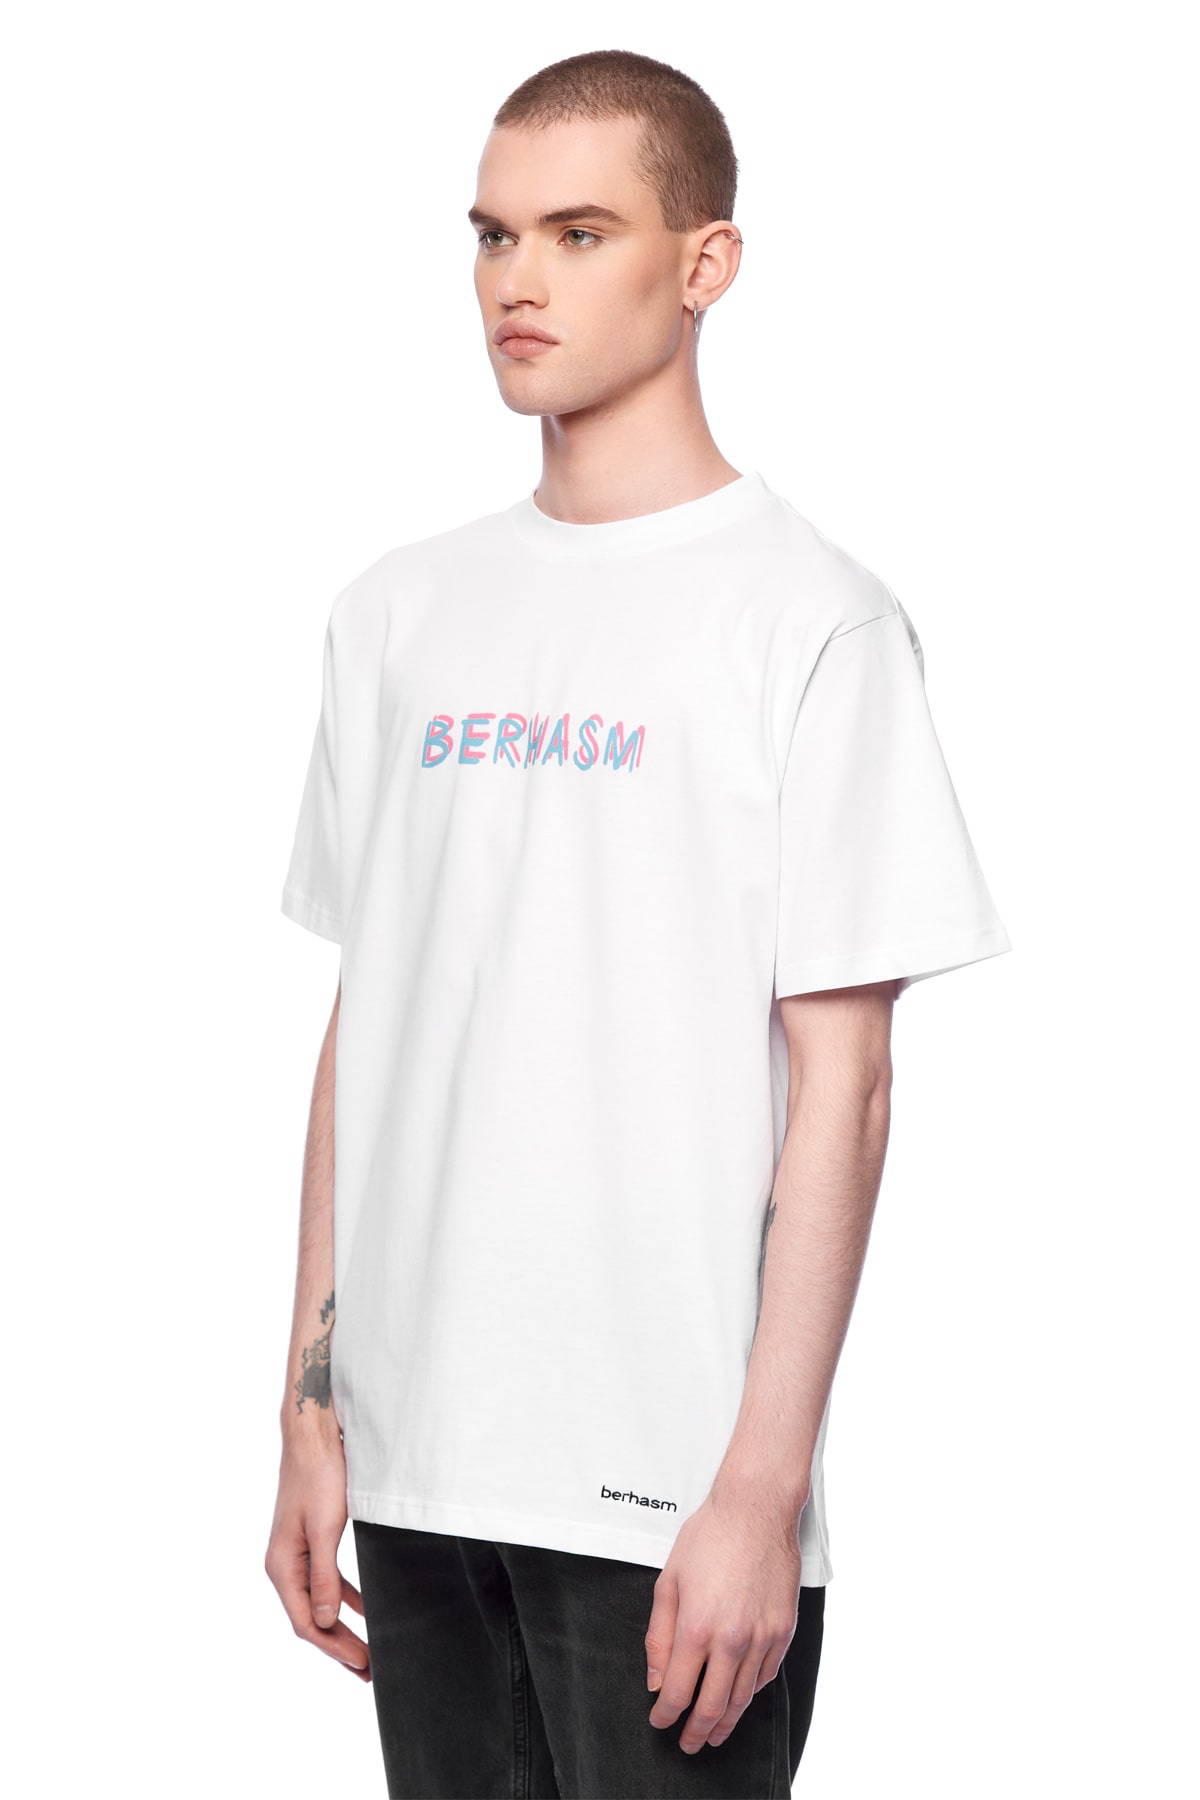 Berhasm Marshmello T-shirt